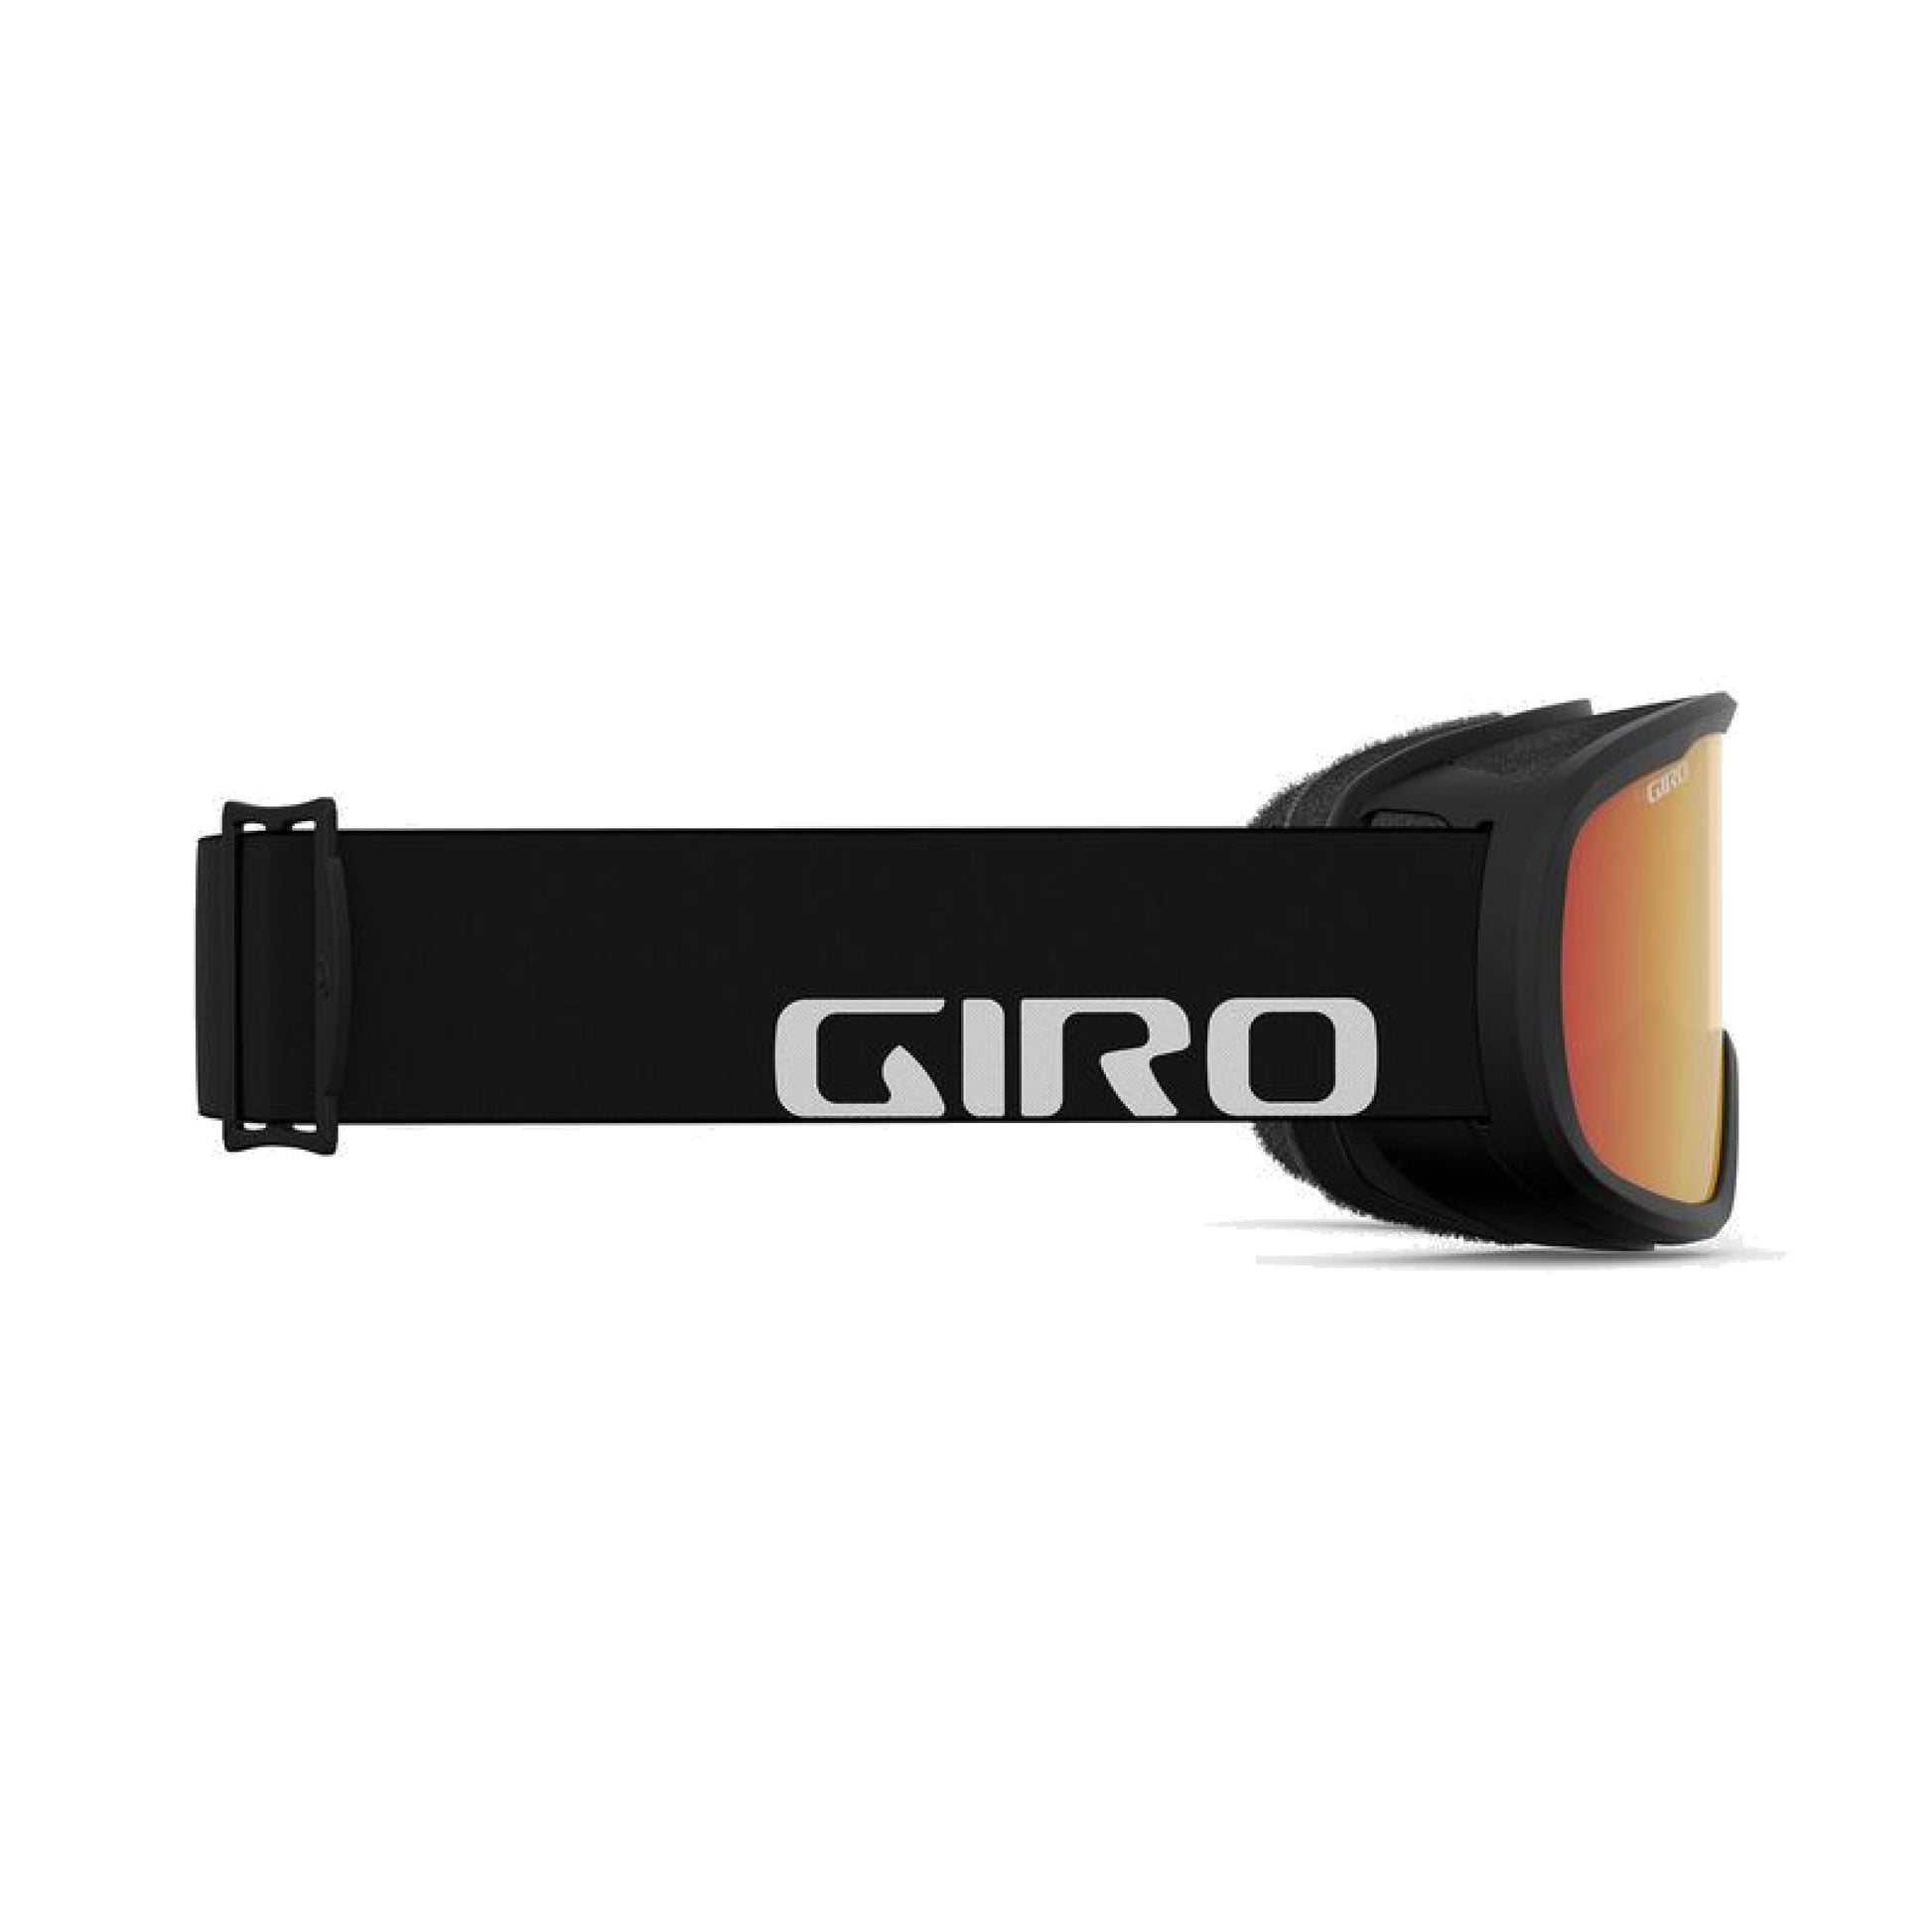 Giro Roam Snow Goggles Black Wordmark / Amber Scarlet Snow Goggles